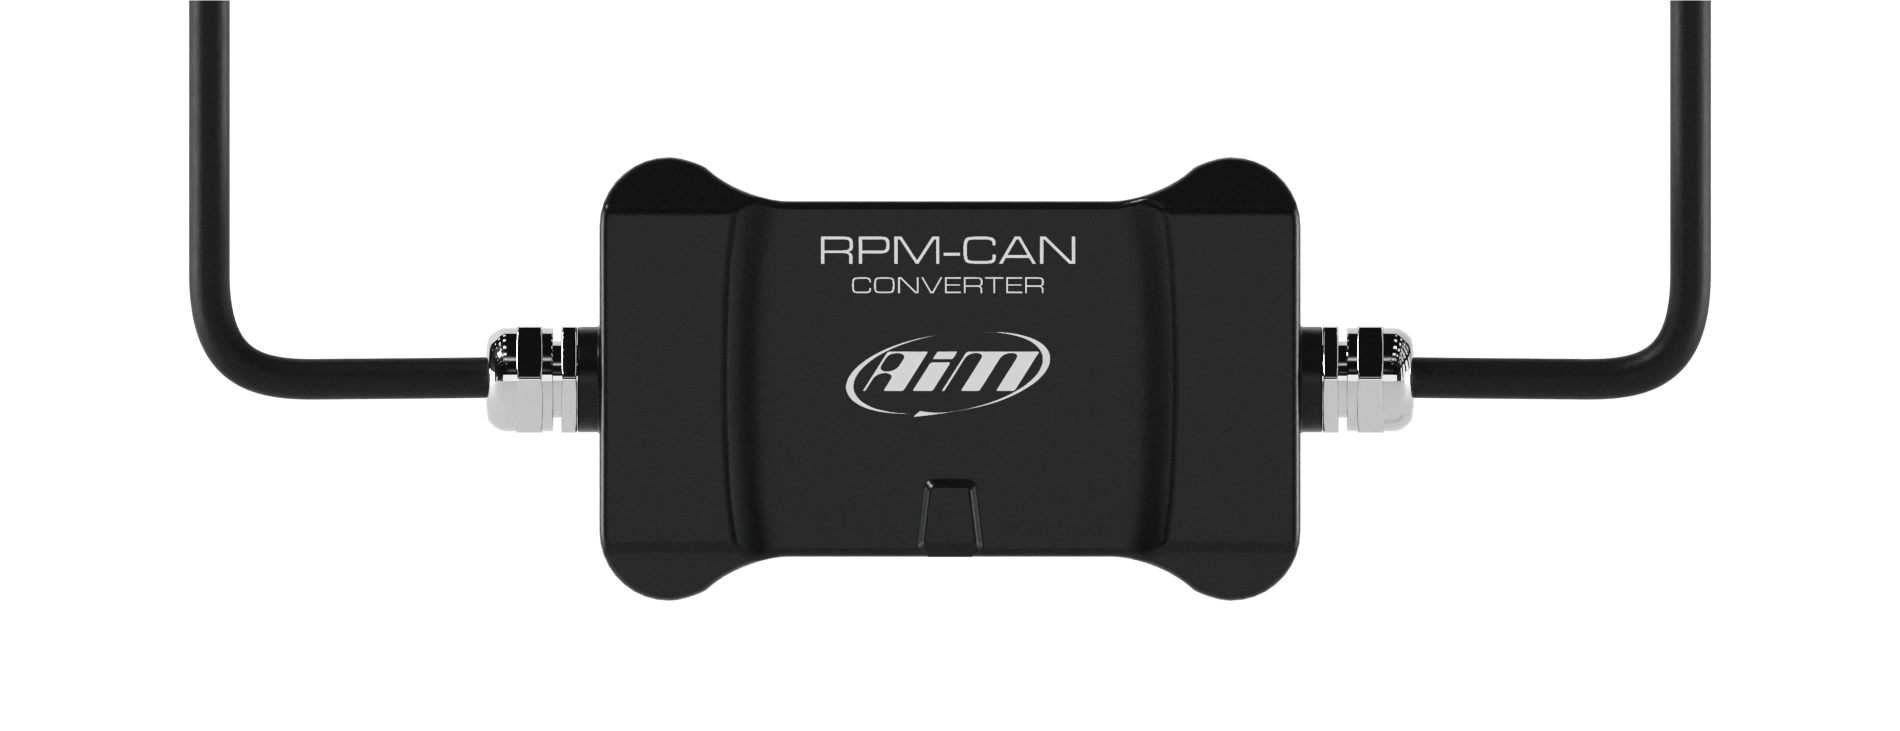 rpm-can converter